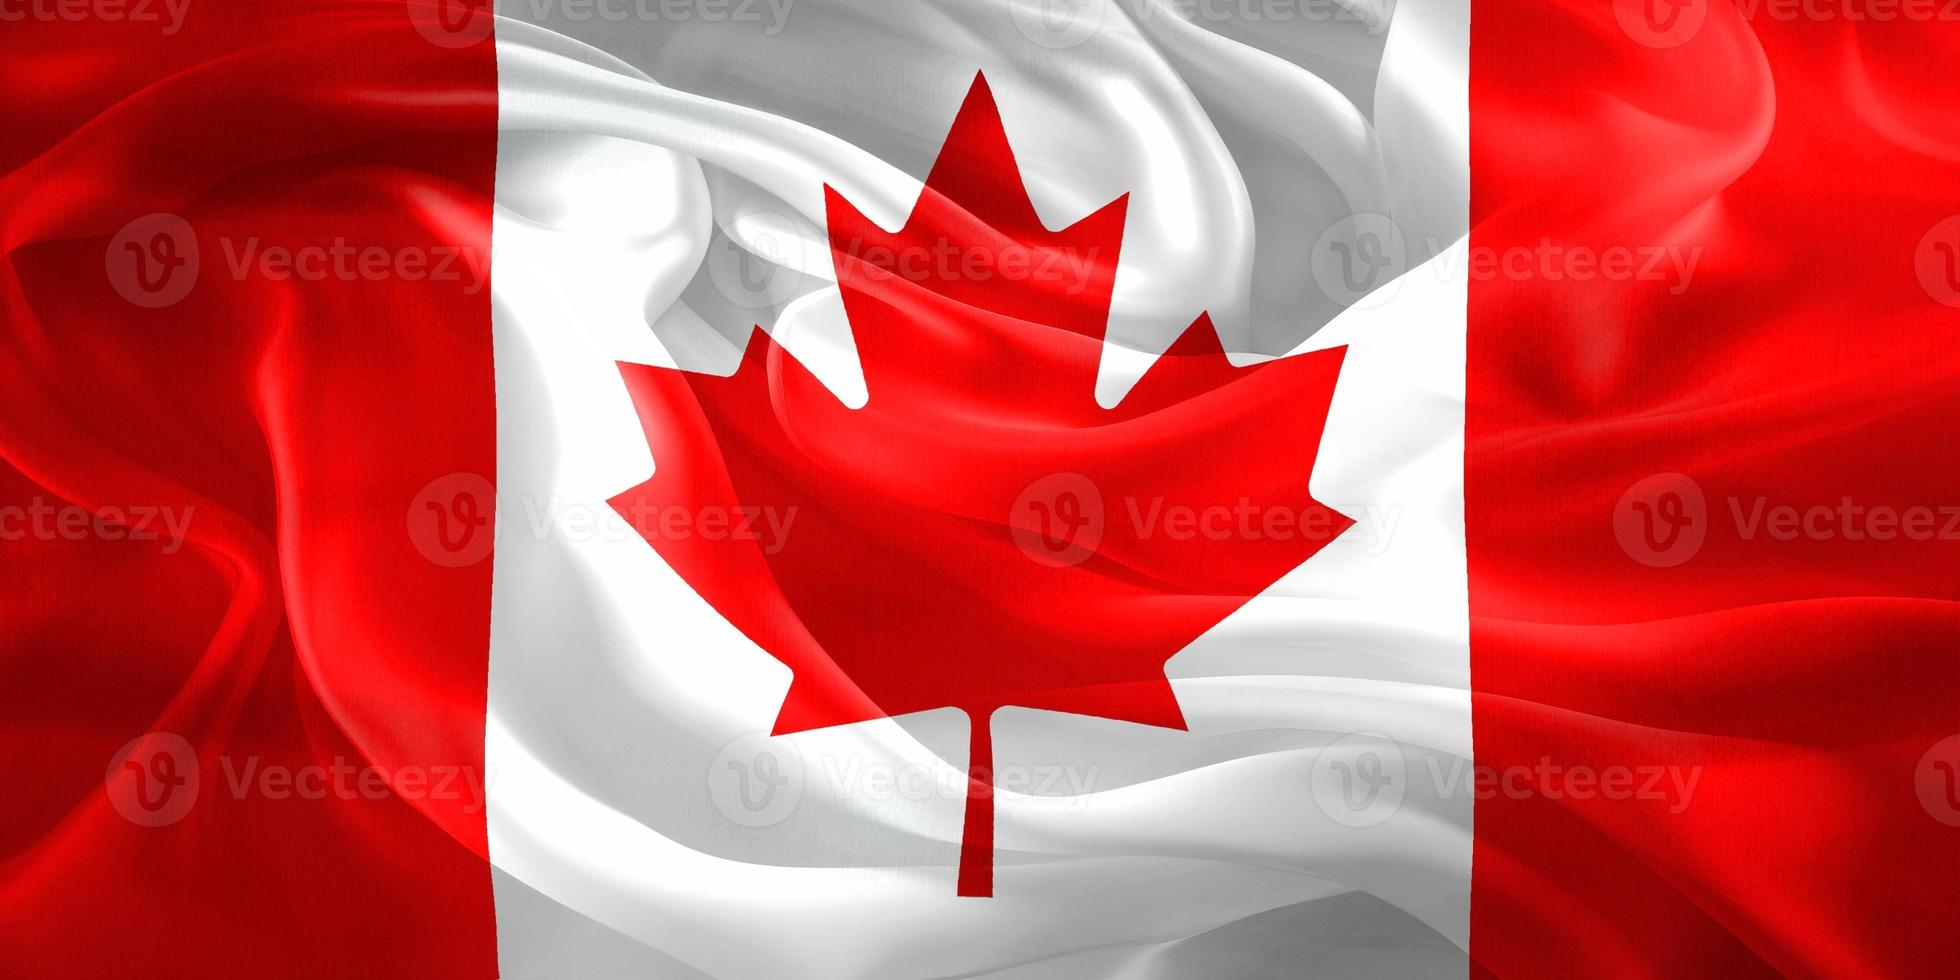 Kanadas flagga - realistiskt viftande tygflagga foto